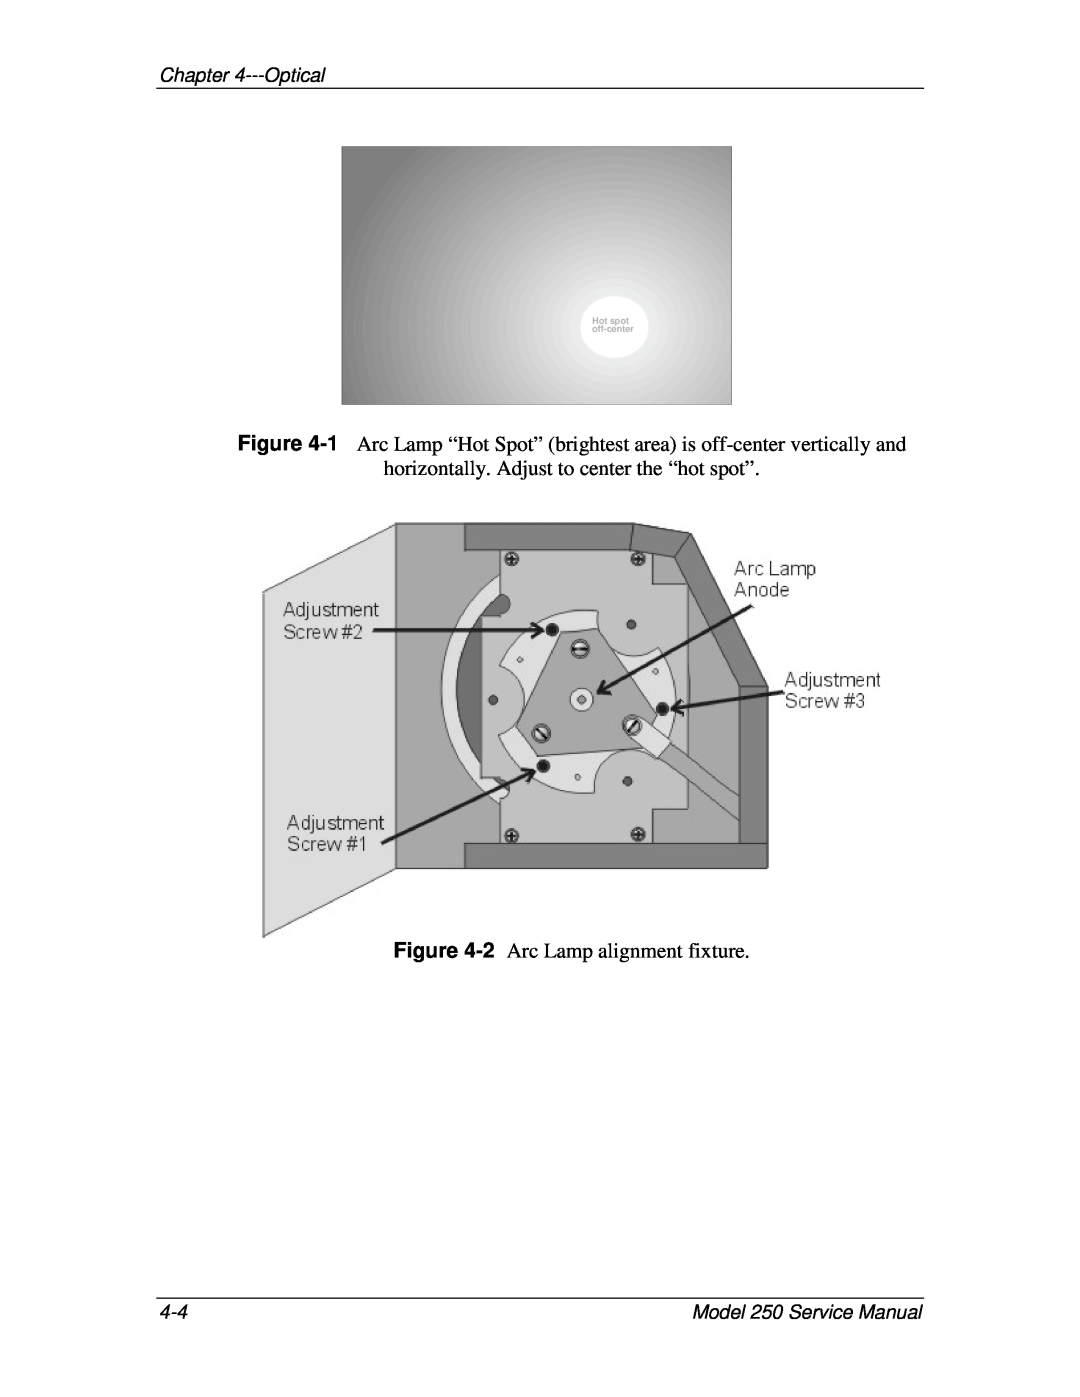 JVC horizontally. Adjust to center the “hot spot”, 2 Arc Lamp alignment fixture, Optical, Model 250 Service Manual 